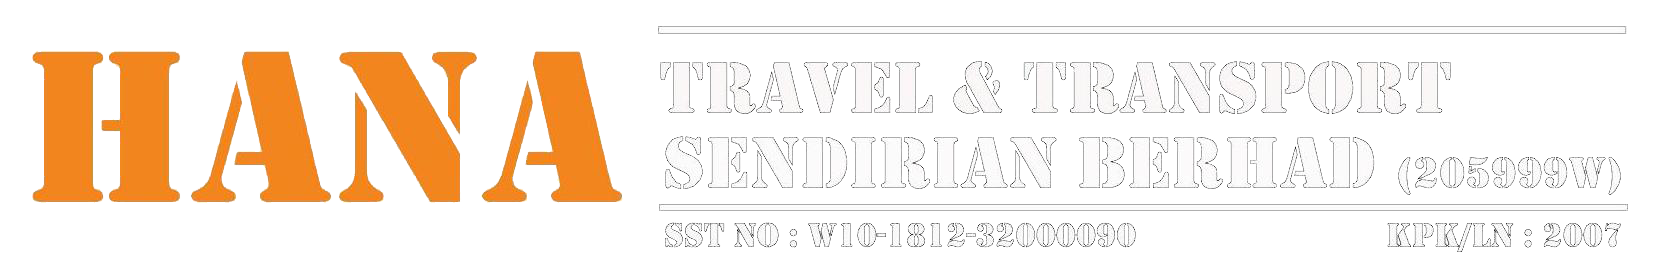 Hana Travel & Transport Sdn Bhd